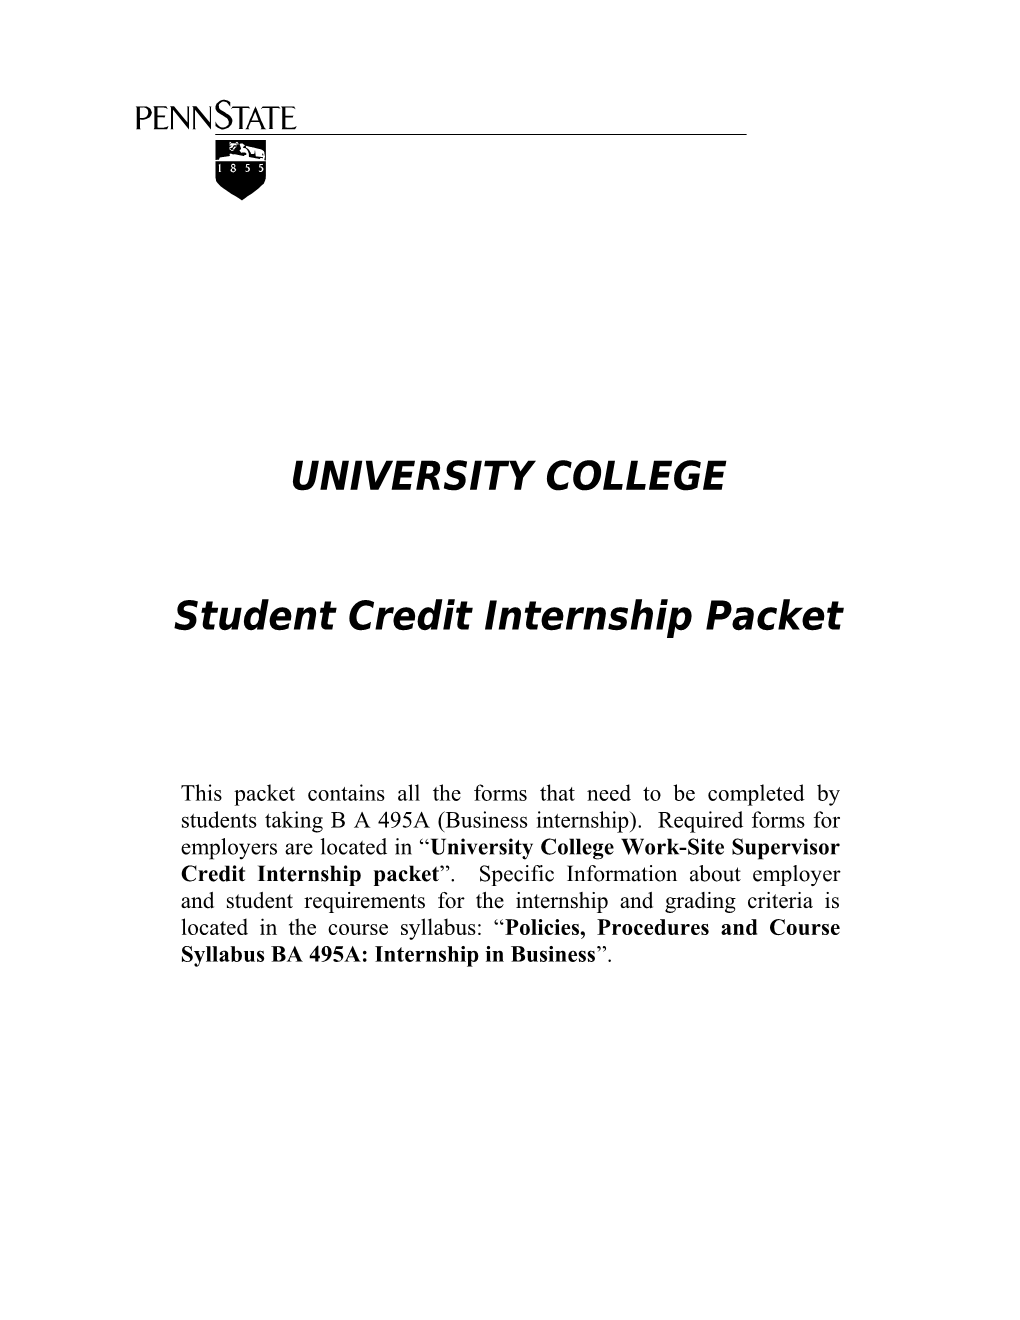 Student Credit Internship Packet